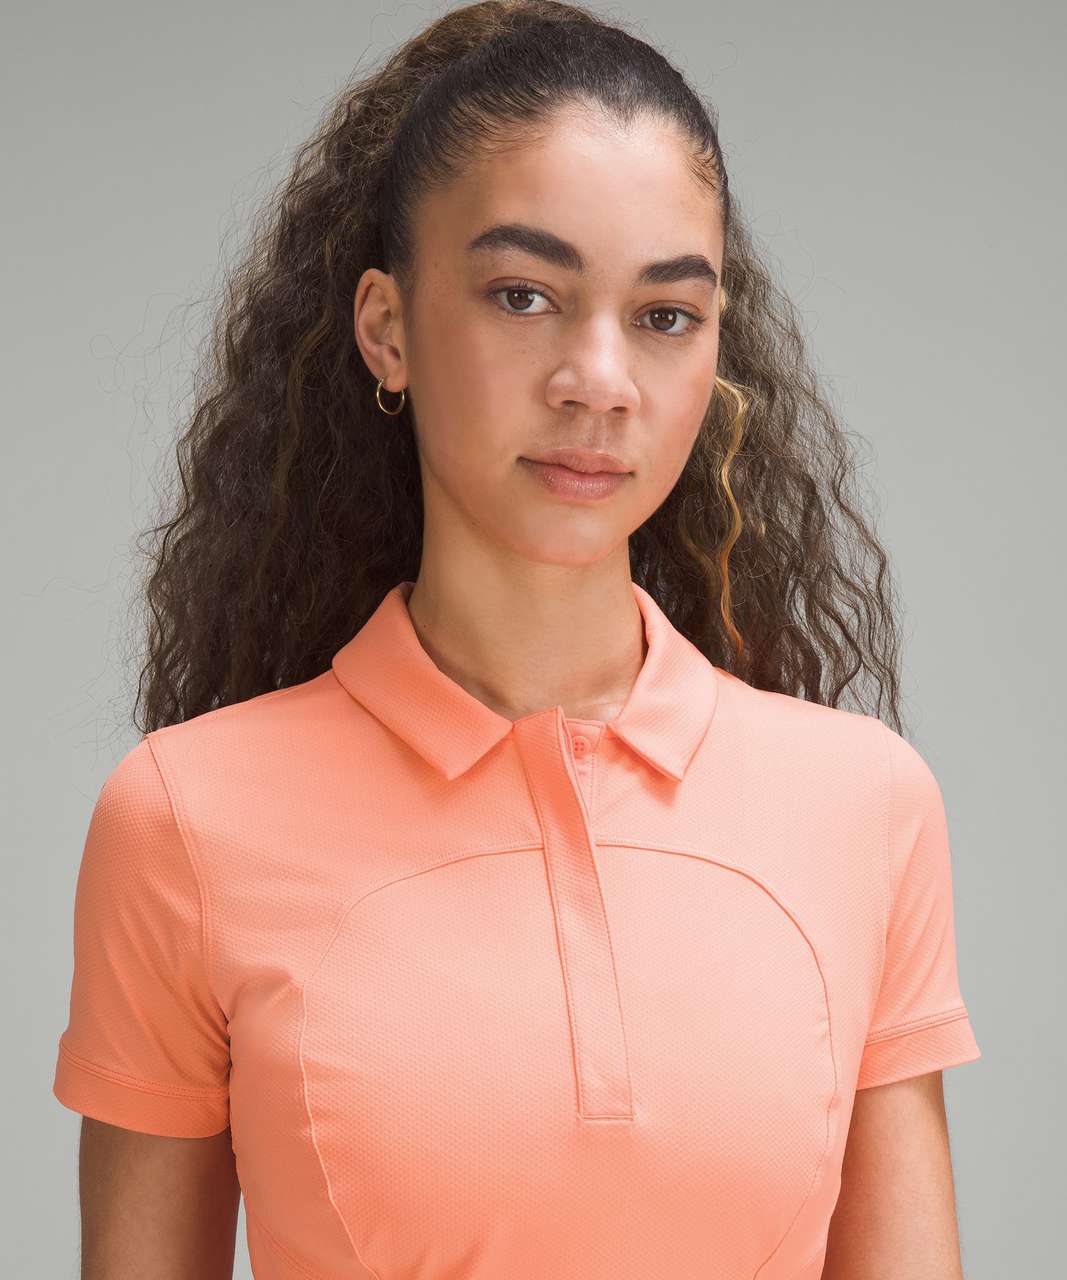 Lululemon Quick-Dry Short-Sleeve Polo Shirt - Sunny Coral